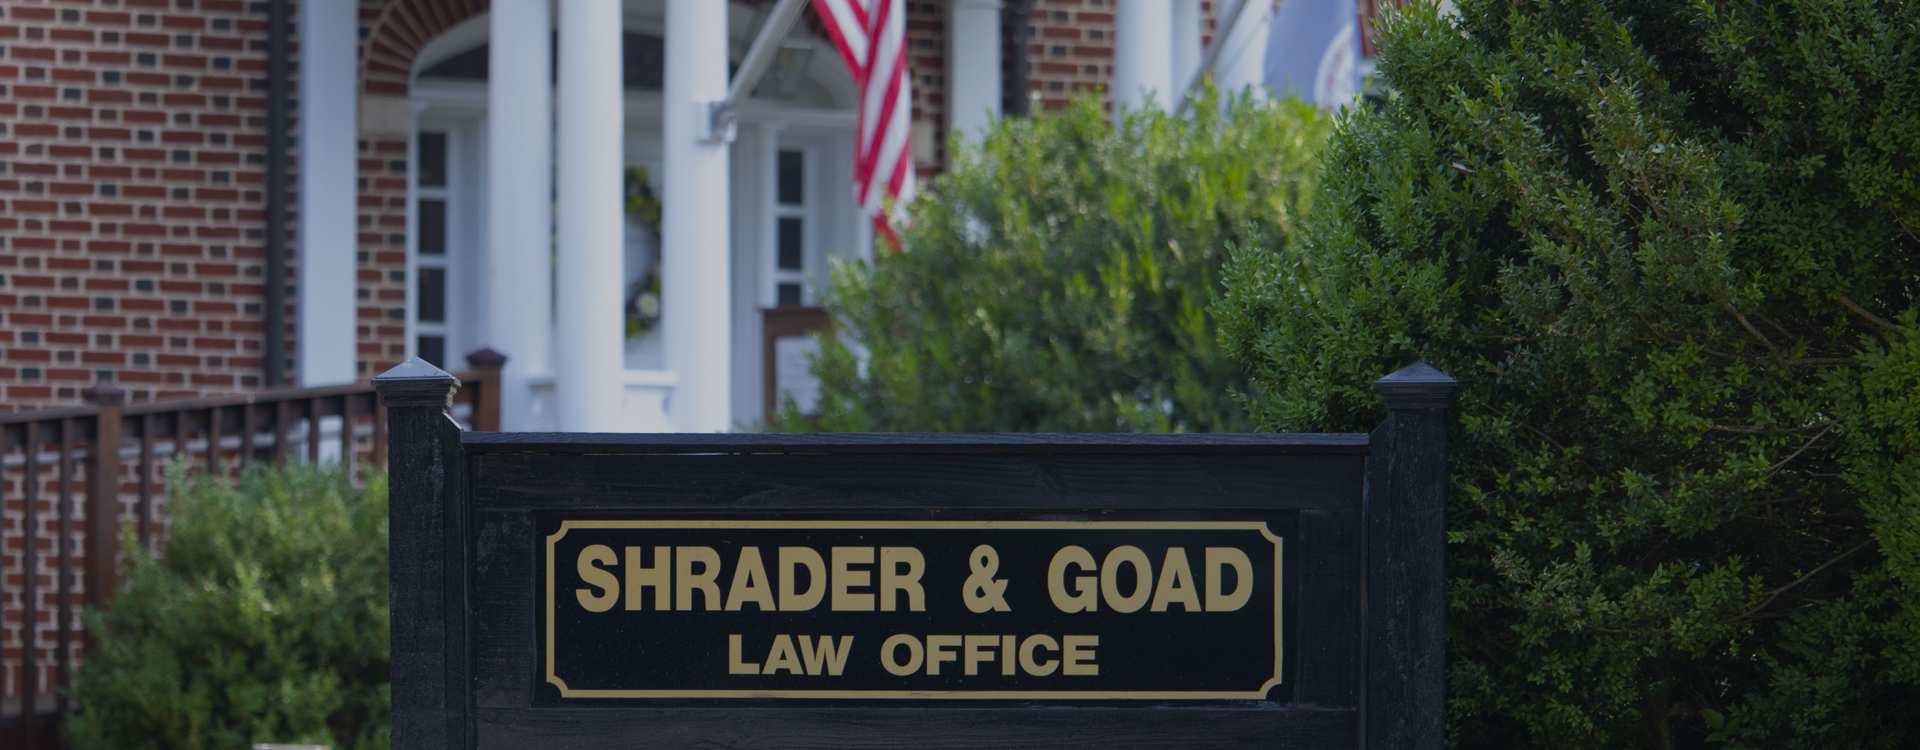 Shrader Goad Law firm 2